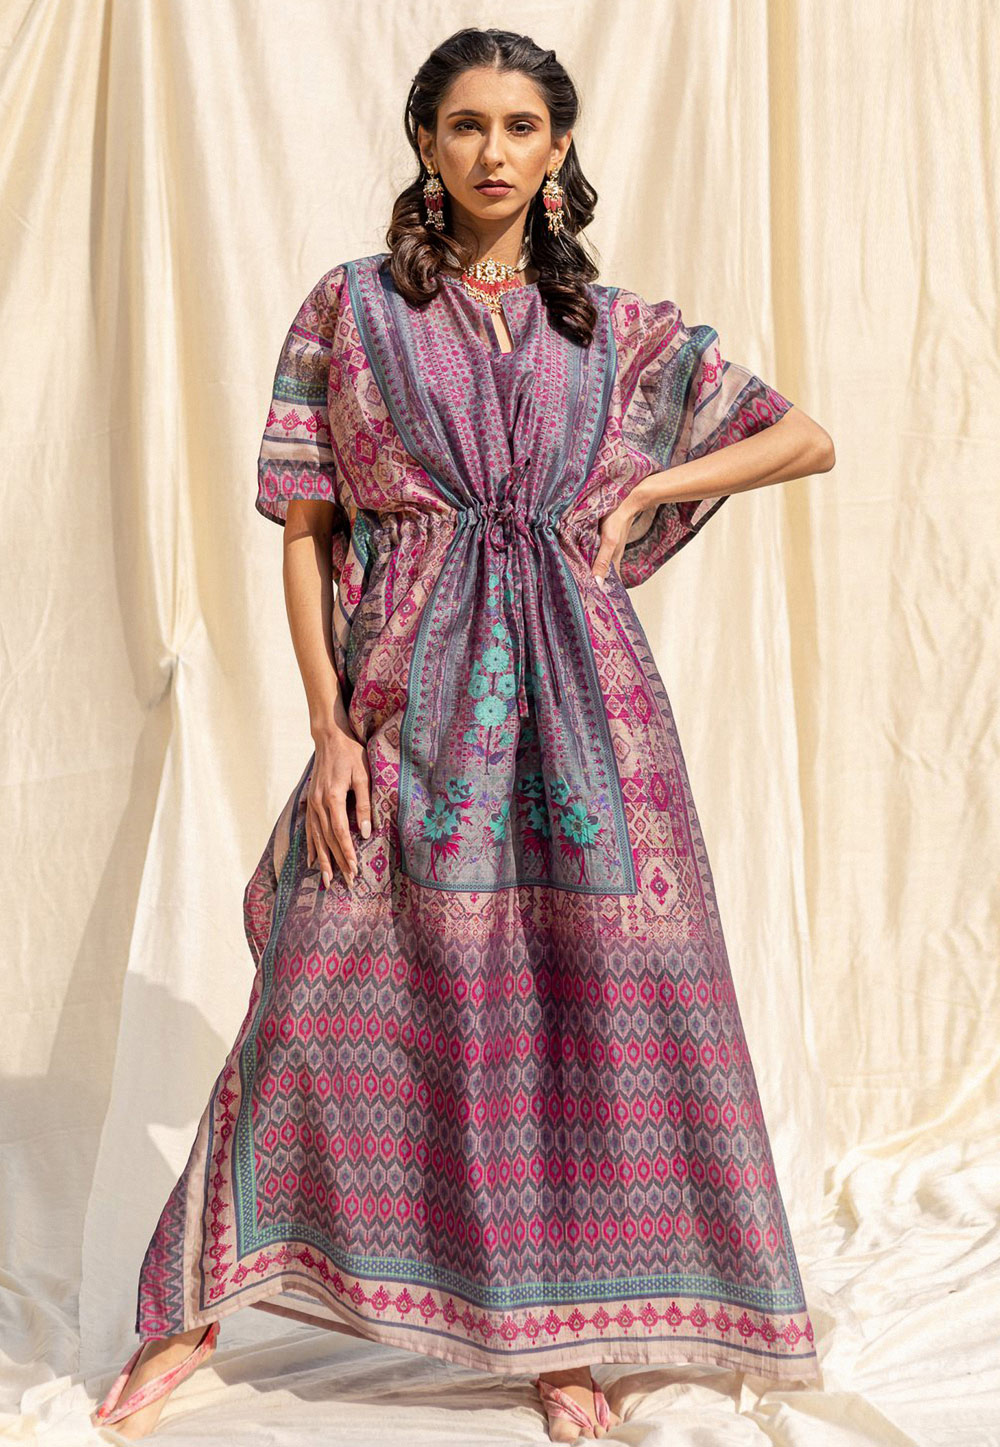 Buy Lastest Islamic Clothing online for Muslim Womens | Modest Dresses